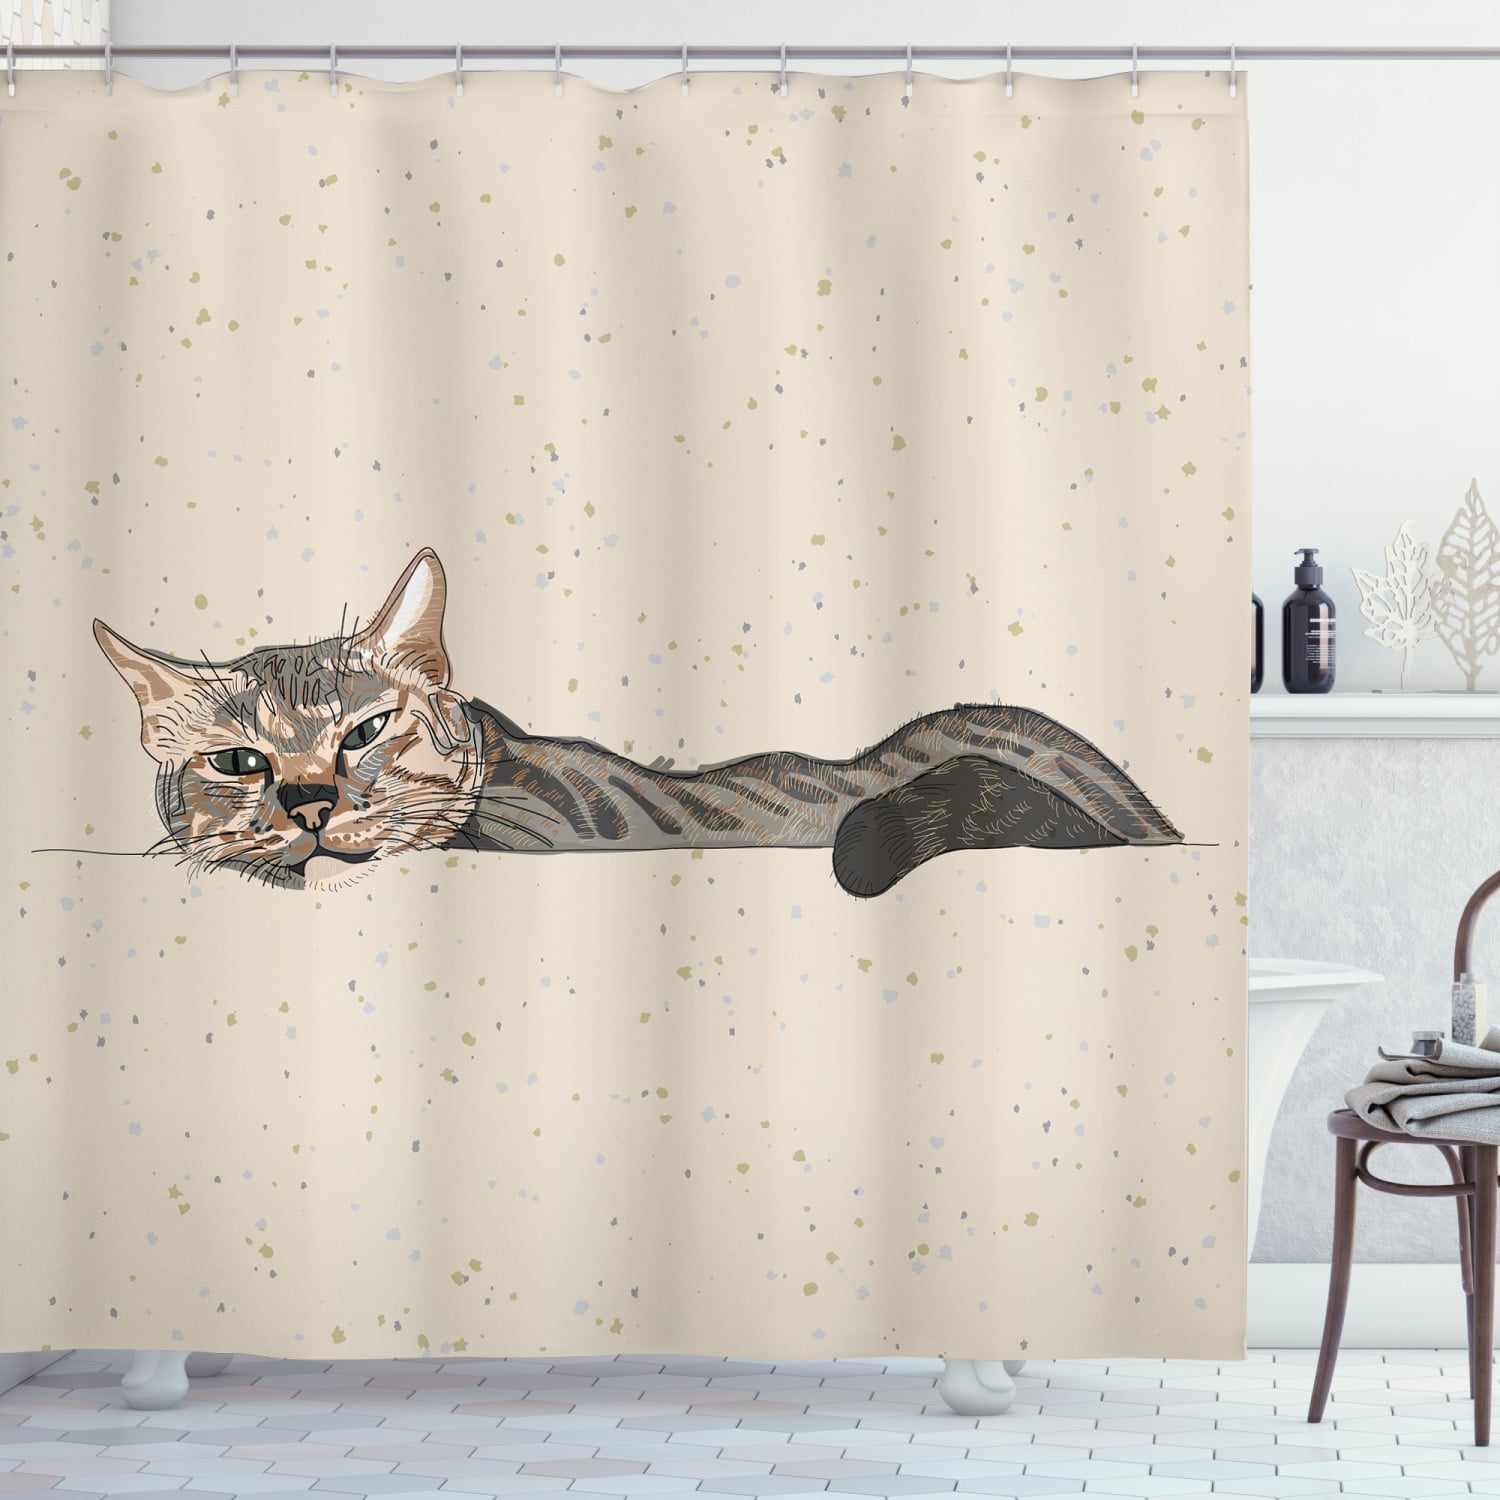 Waterproof Fabric Green Eyed Cat Shower Curtain Liner Bathroom Decor 12Hooks Set 